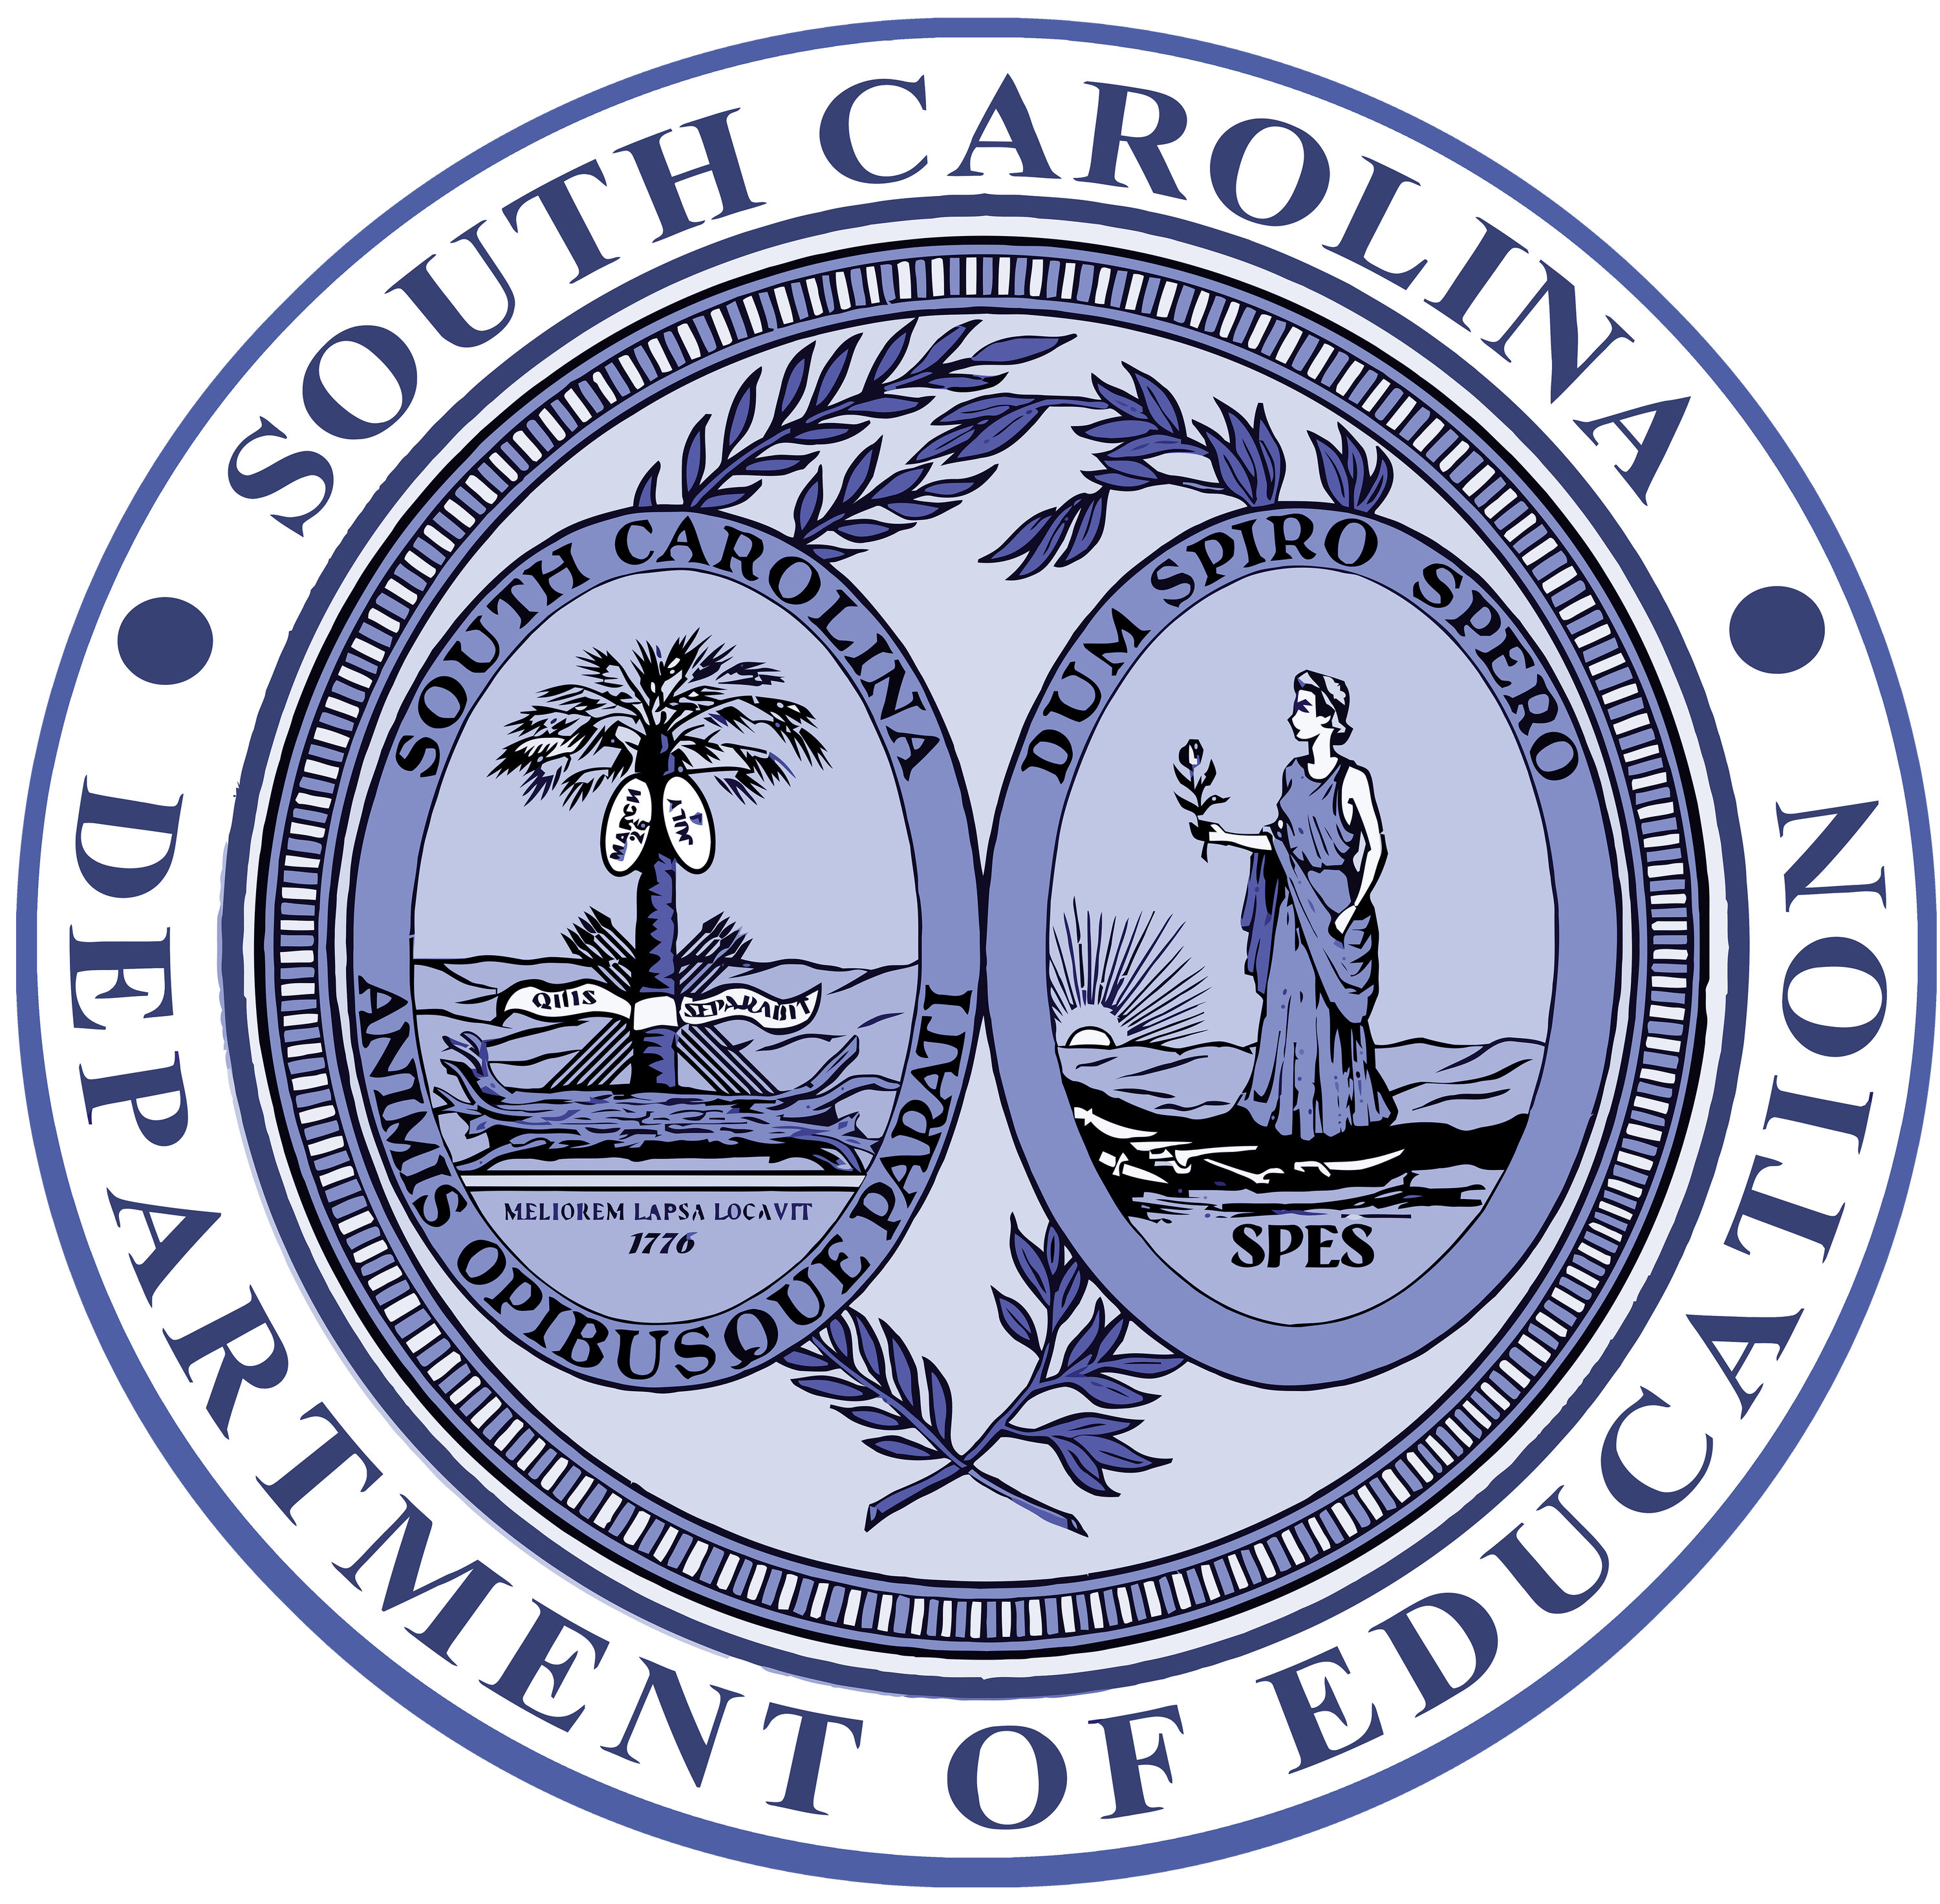 South Carolina Department of Education